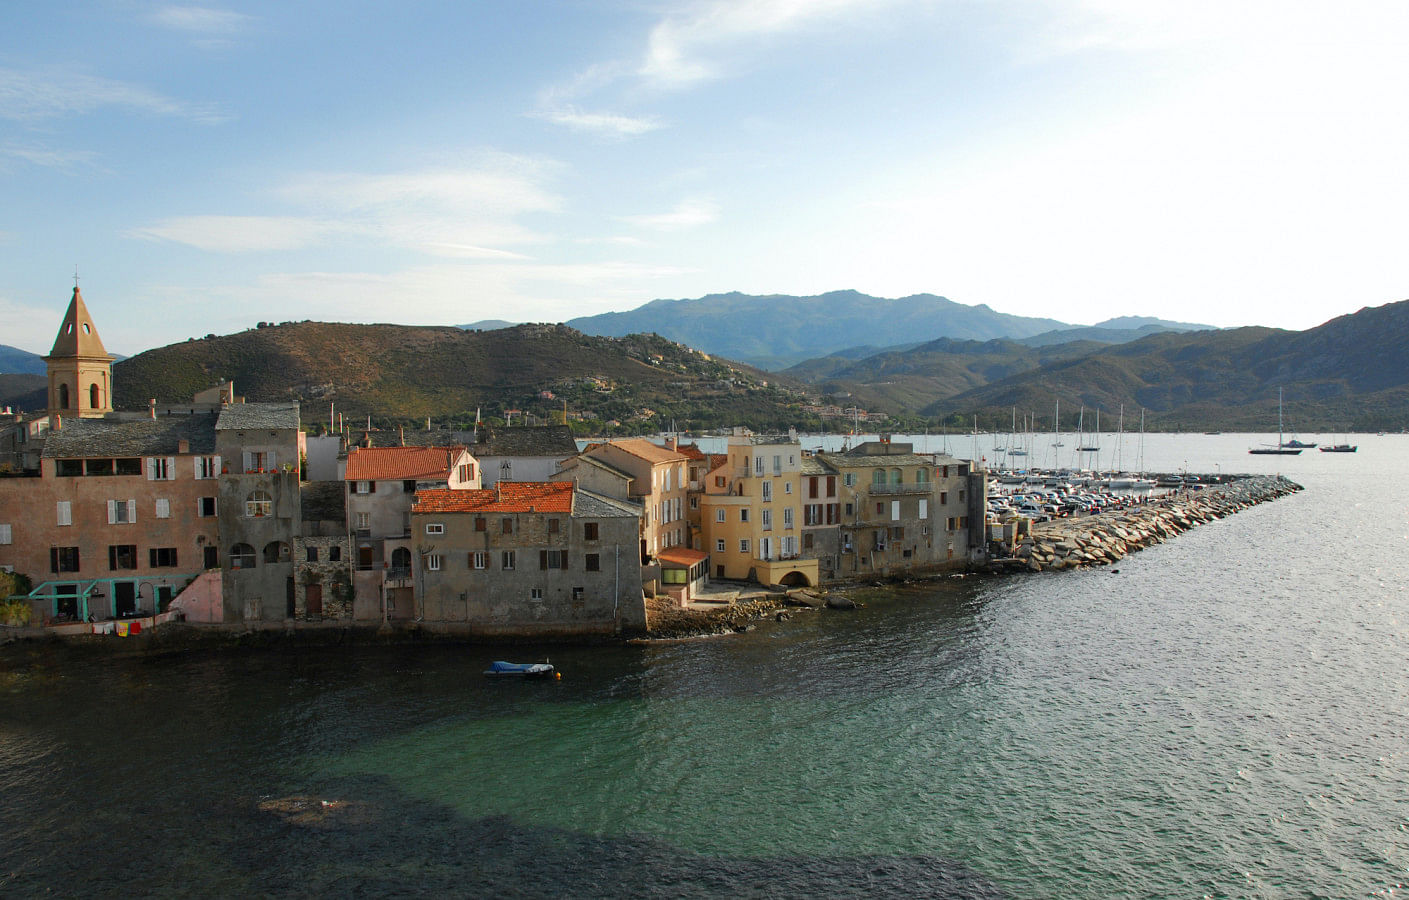 Hyr en båt i Korsika